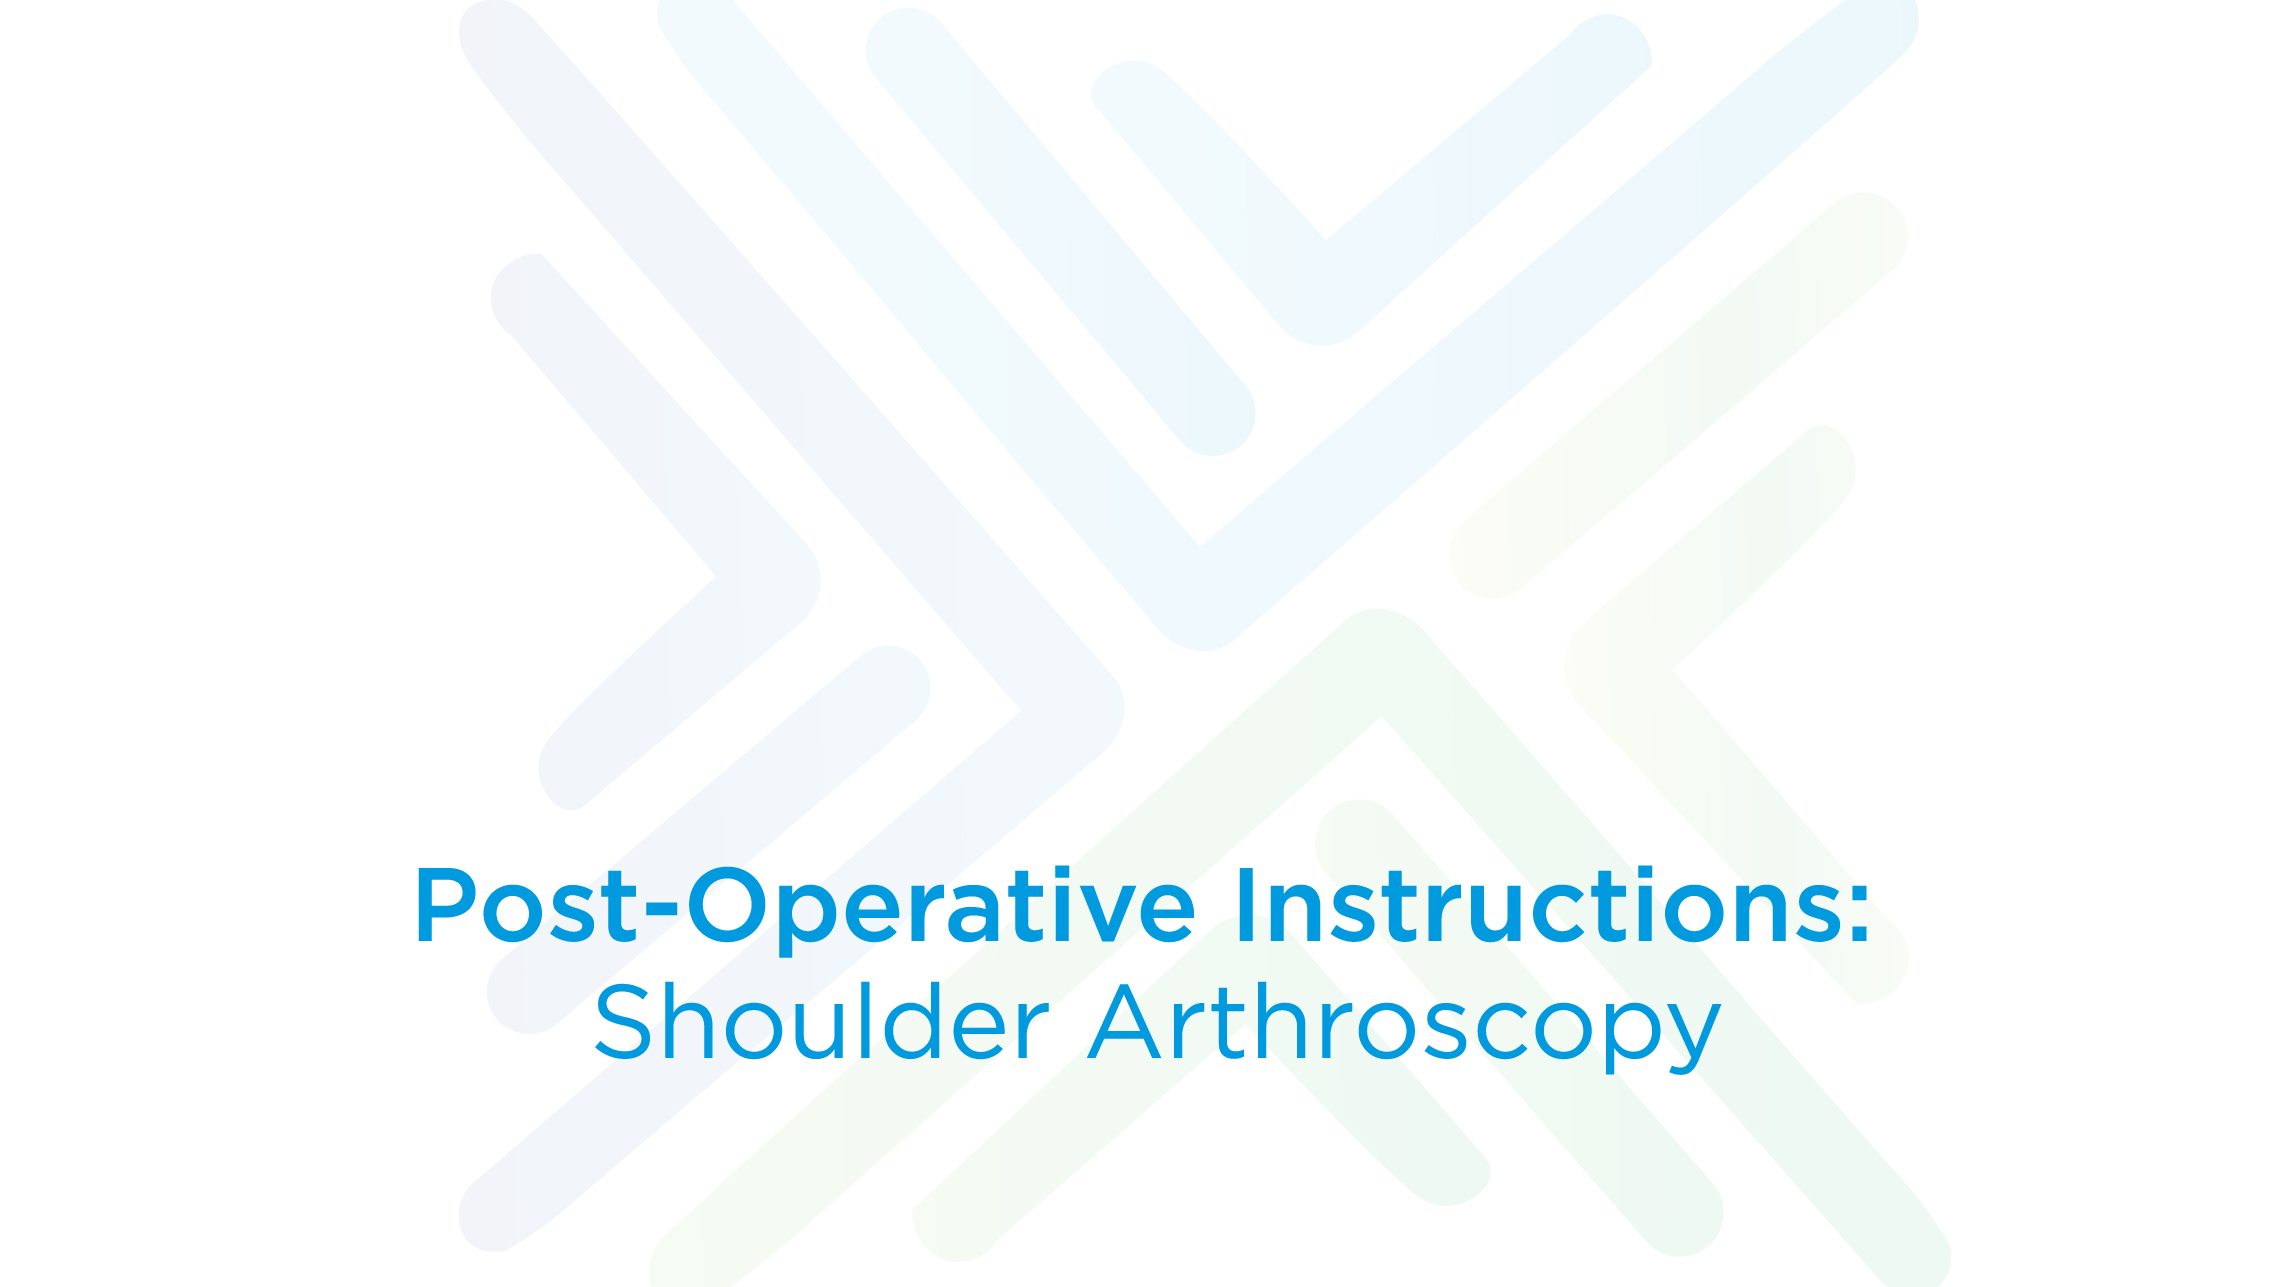 Post-Operative Instructions: Shoulder Arthroscopy